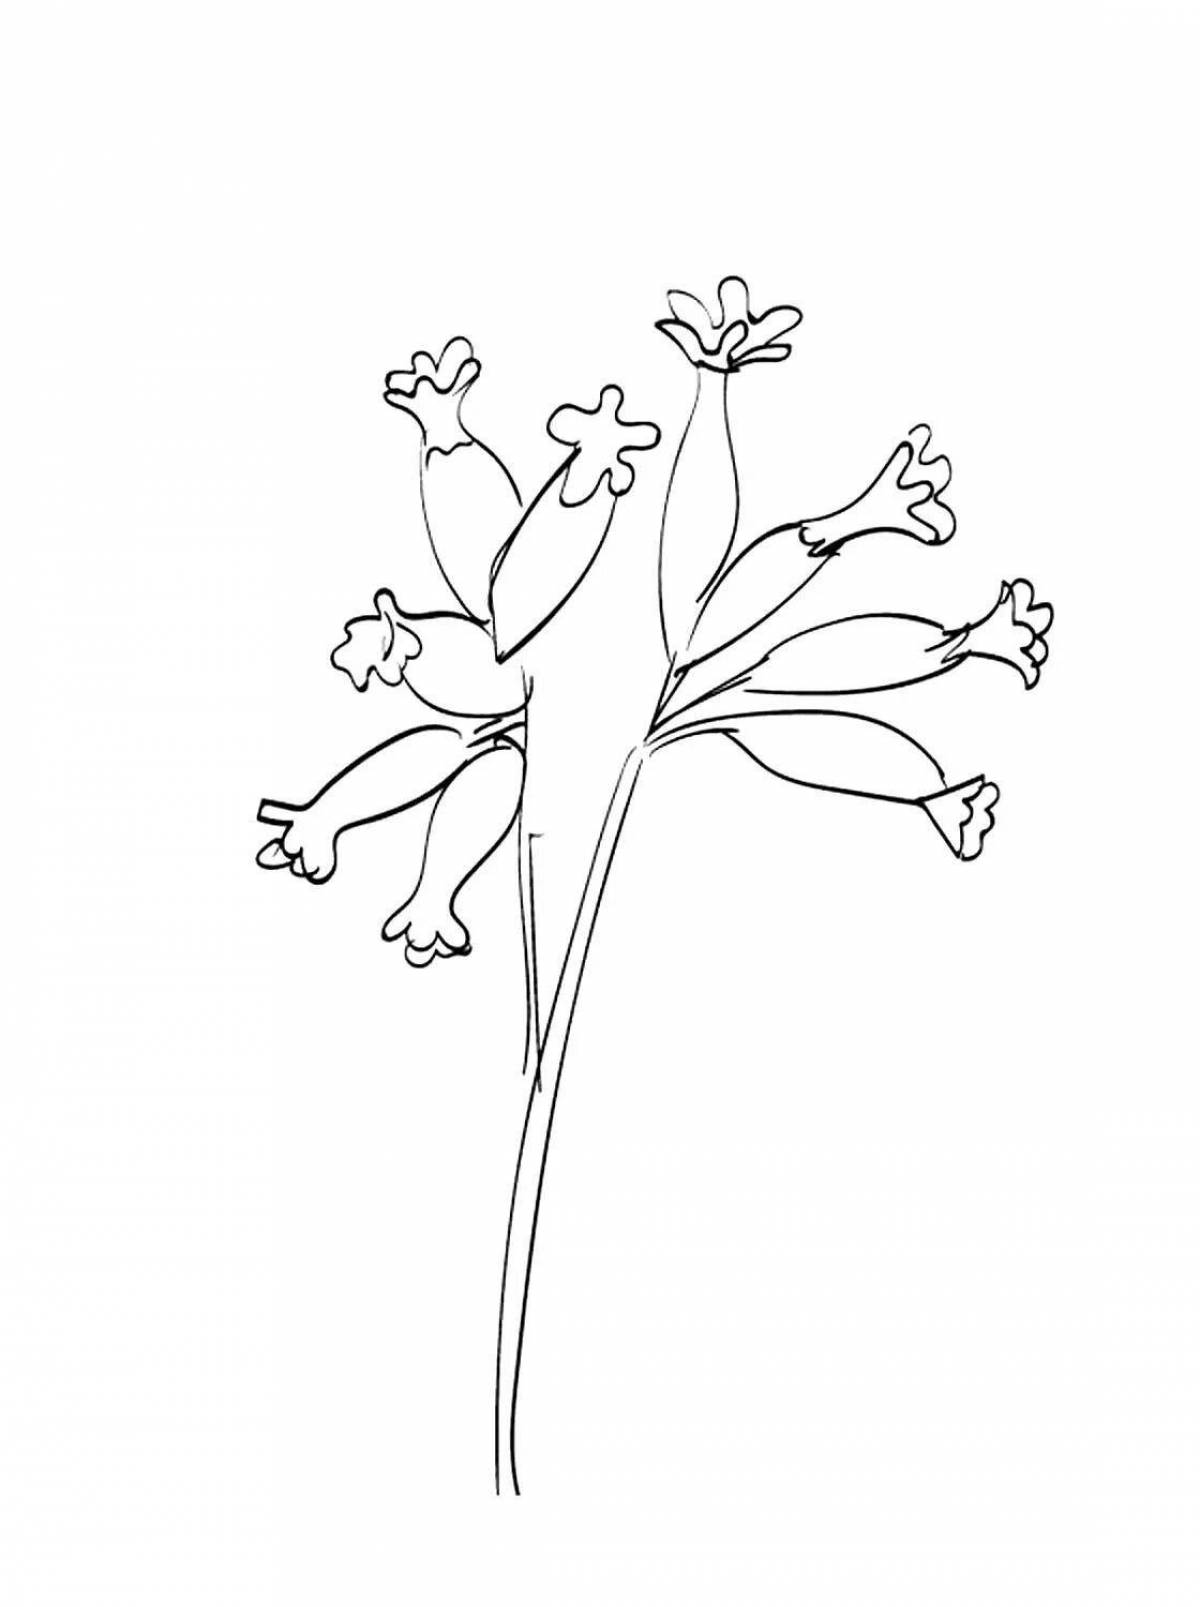 Colouring primrose corydalis